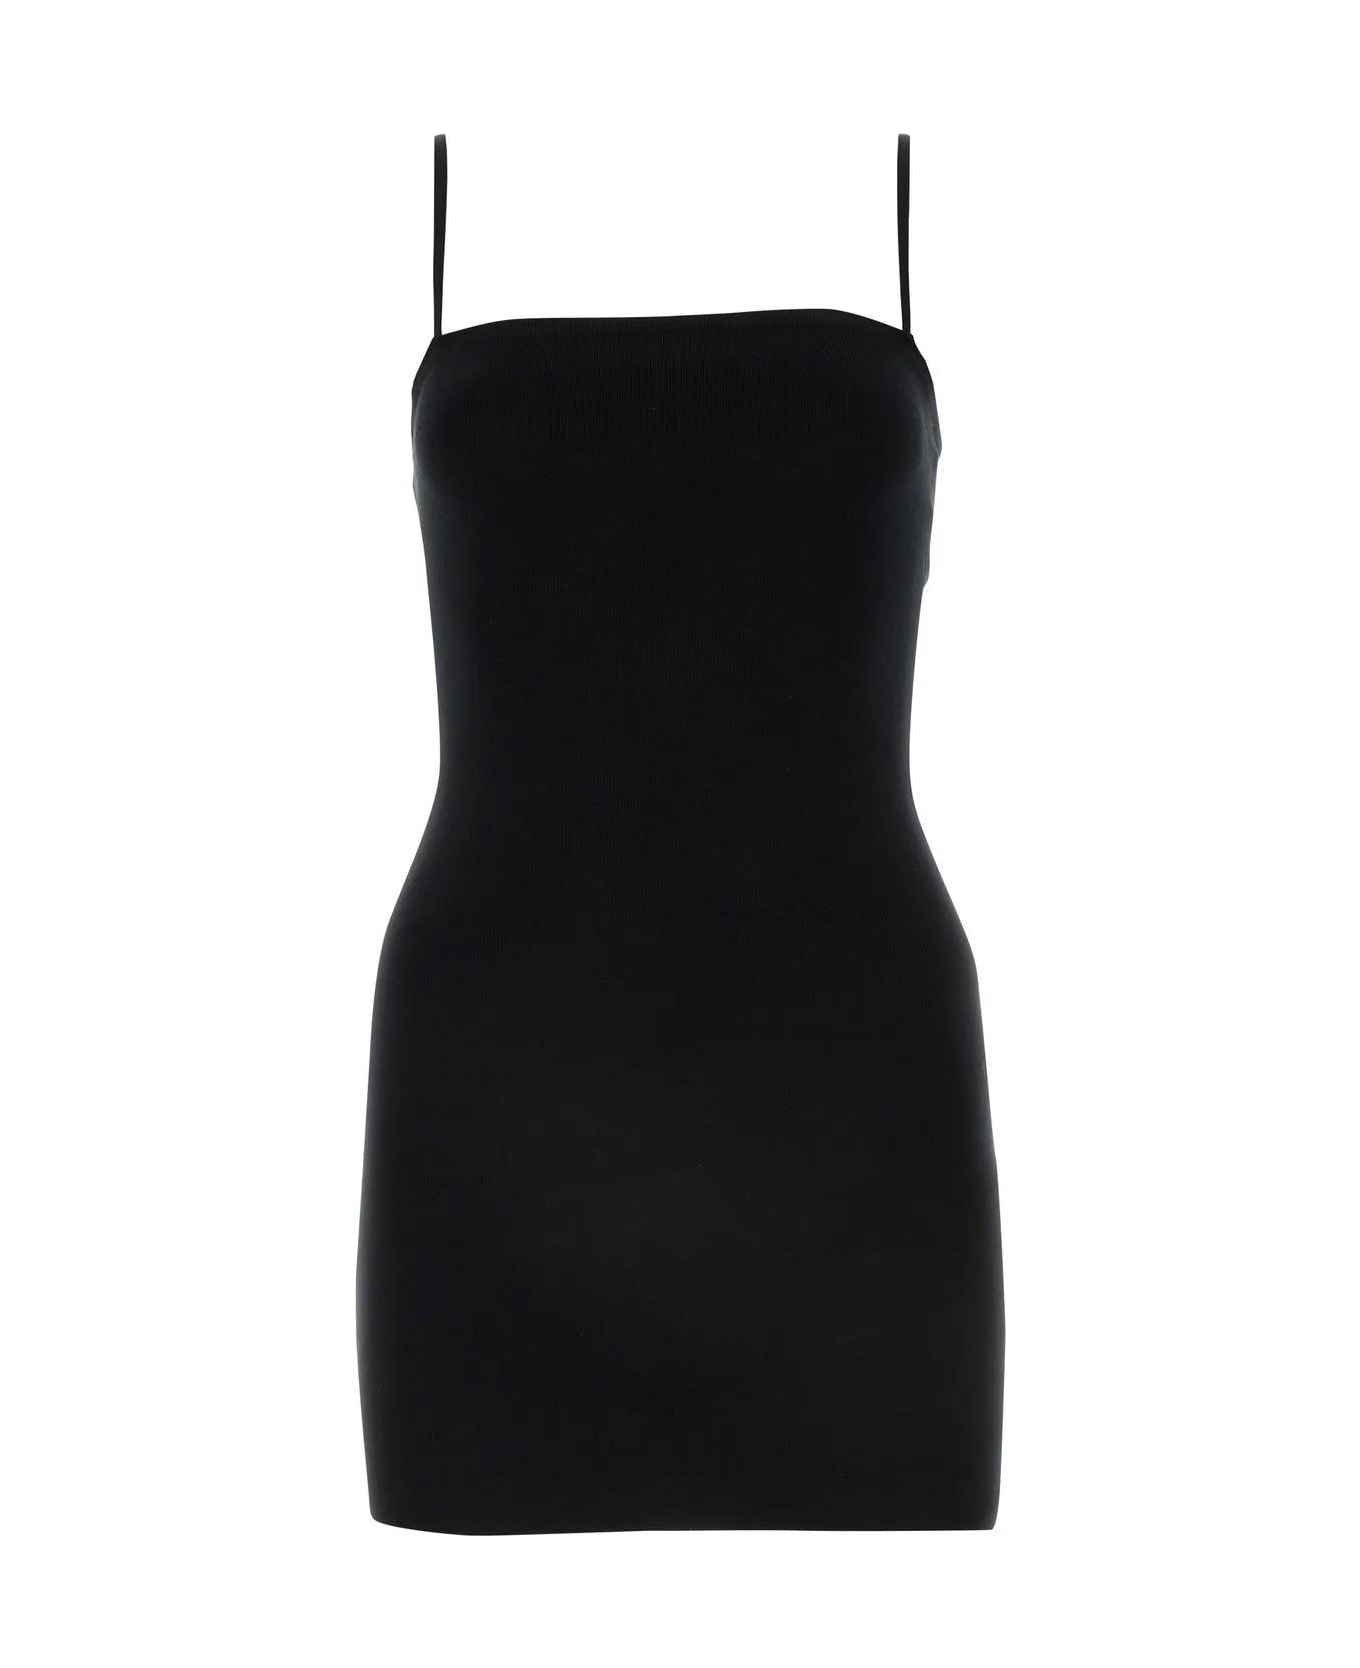 Alexander Wang Black Stretch Cupro Blend Mini Dress - Black